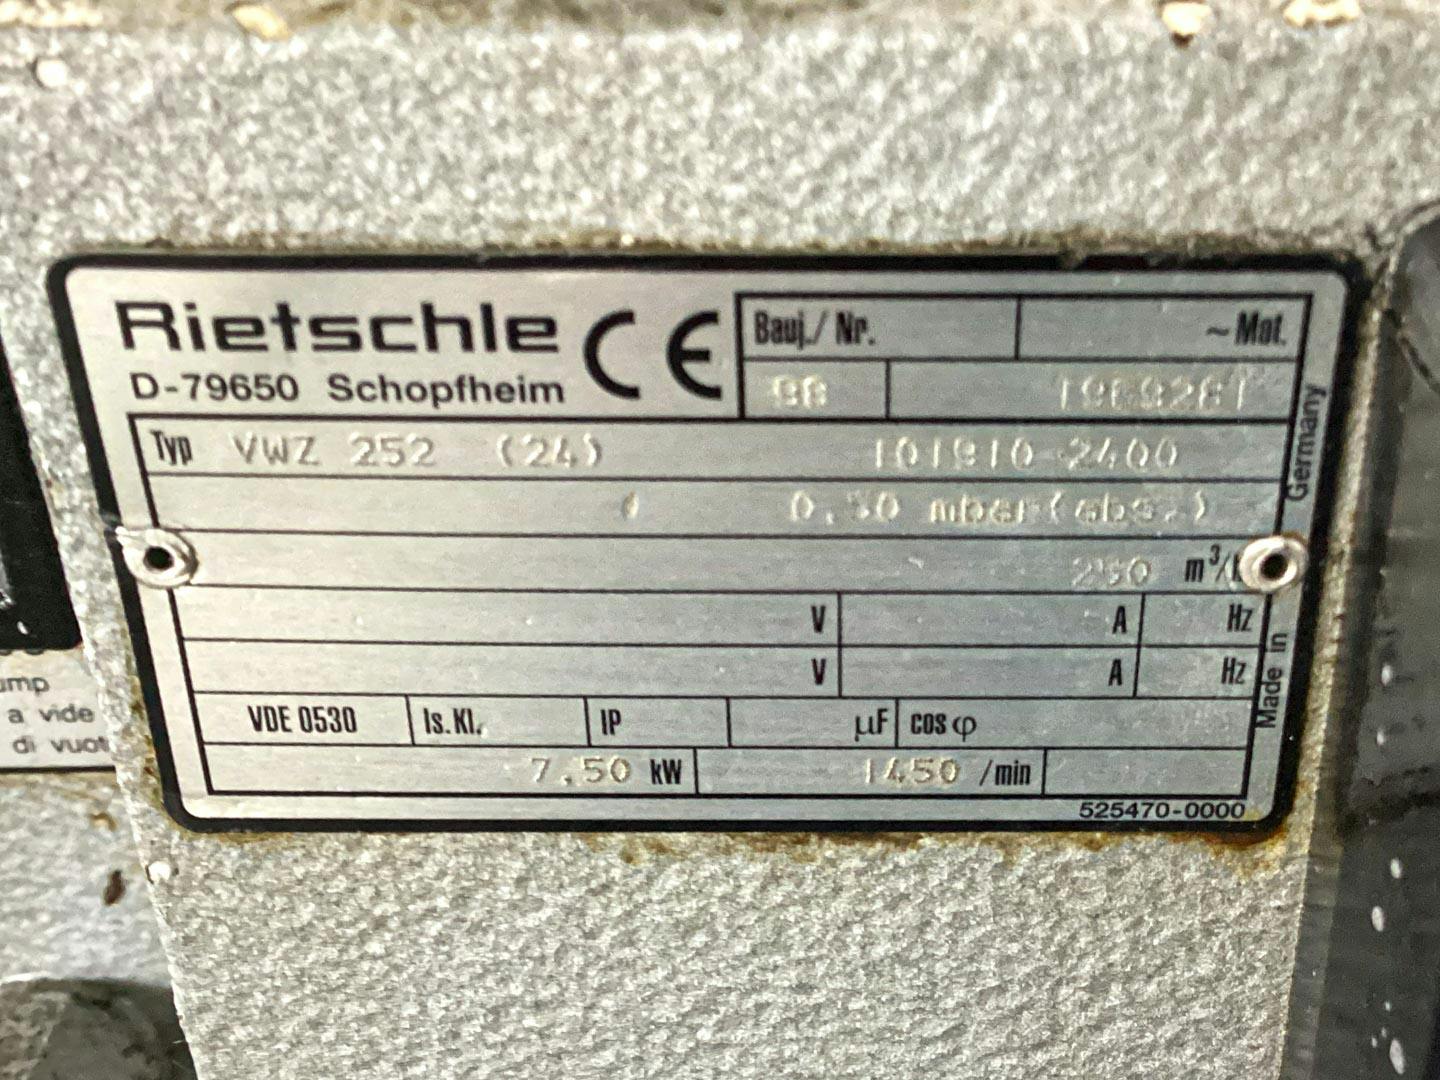 Rietschle VWZ 252 (24) - Pompa a vuoto - image 7